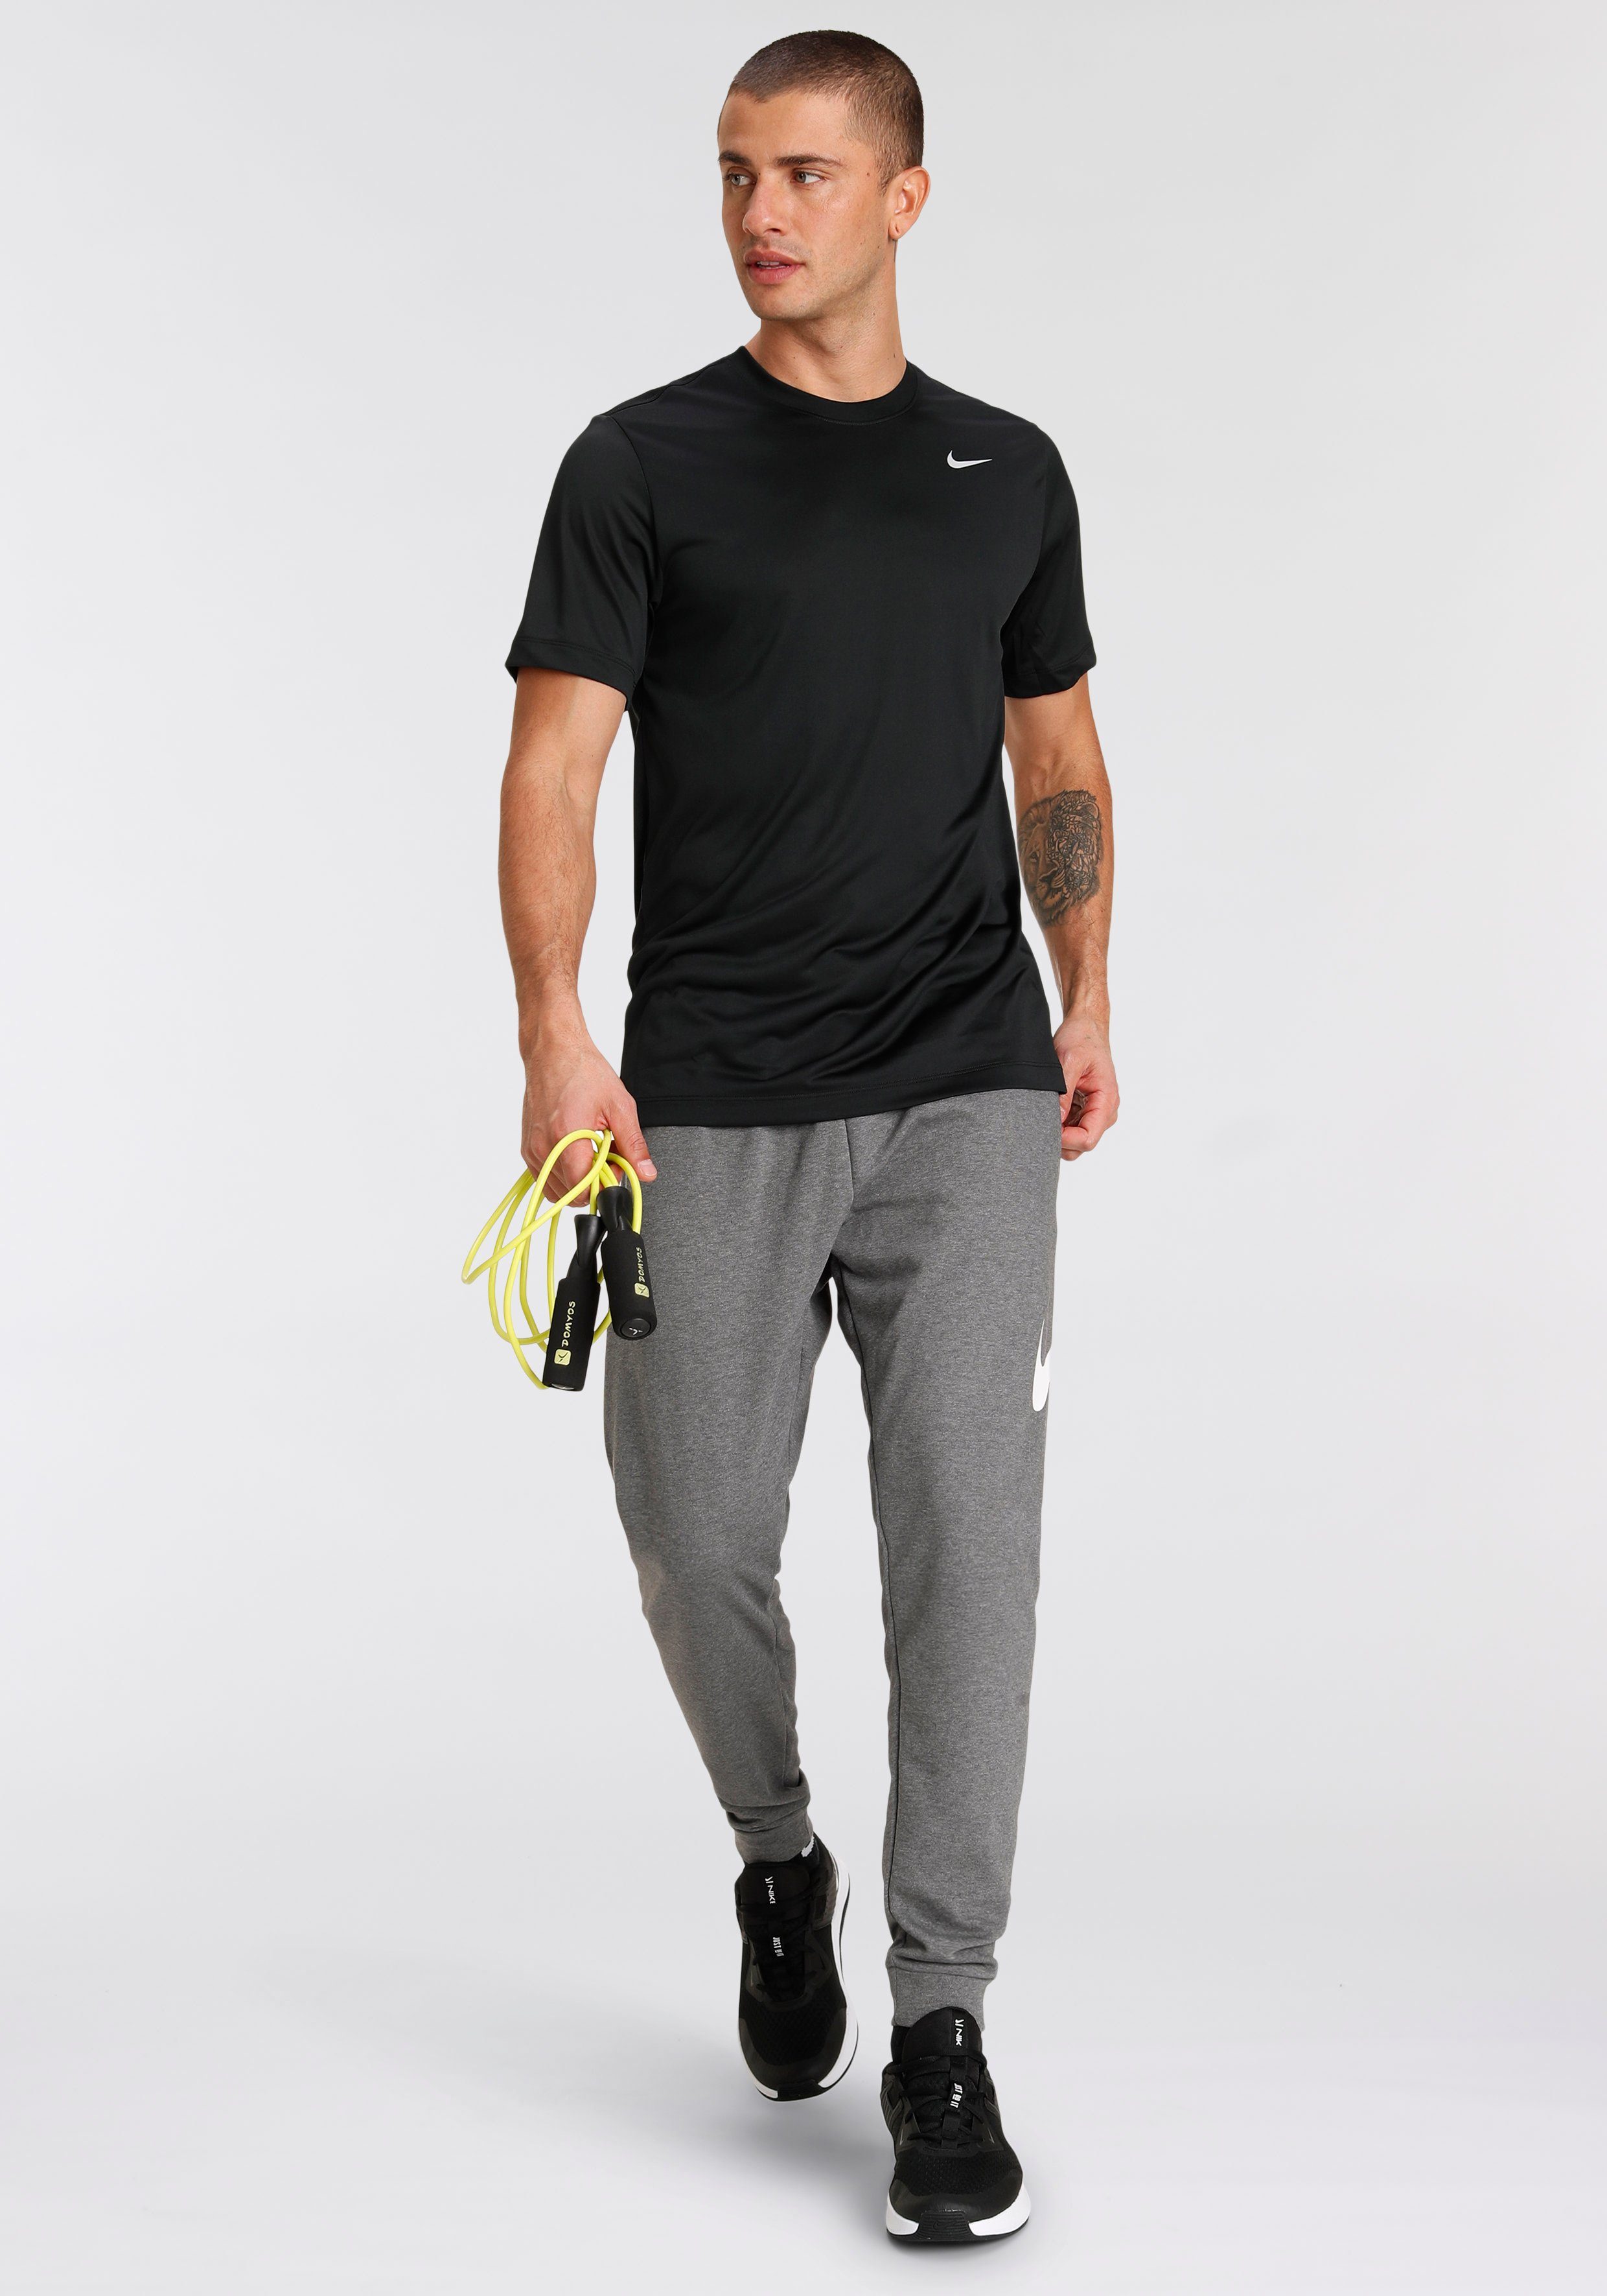 Nike Trainingsshirt MEN'S T-SHIRT SILVER DRI-FIT FITNESS BLACK/MATTE LEGEND